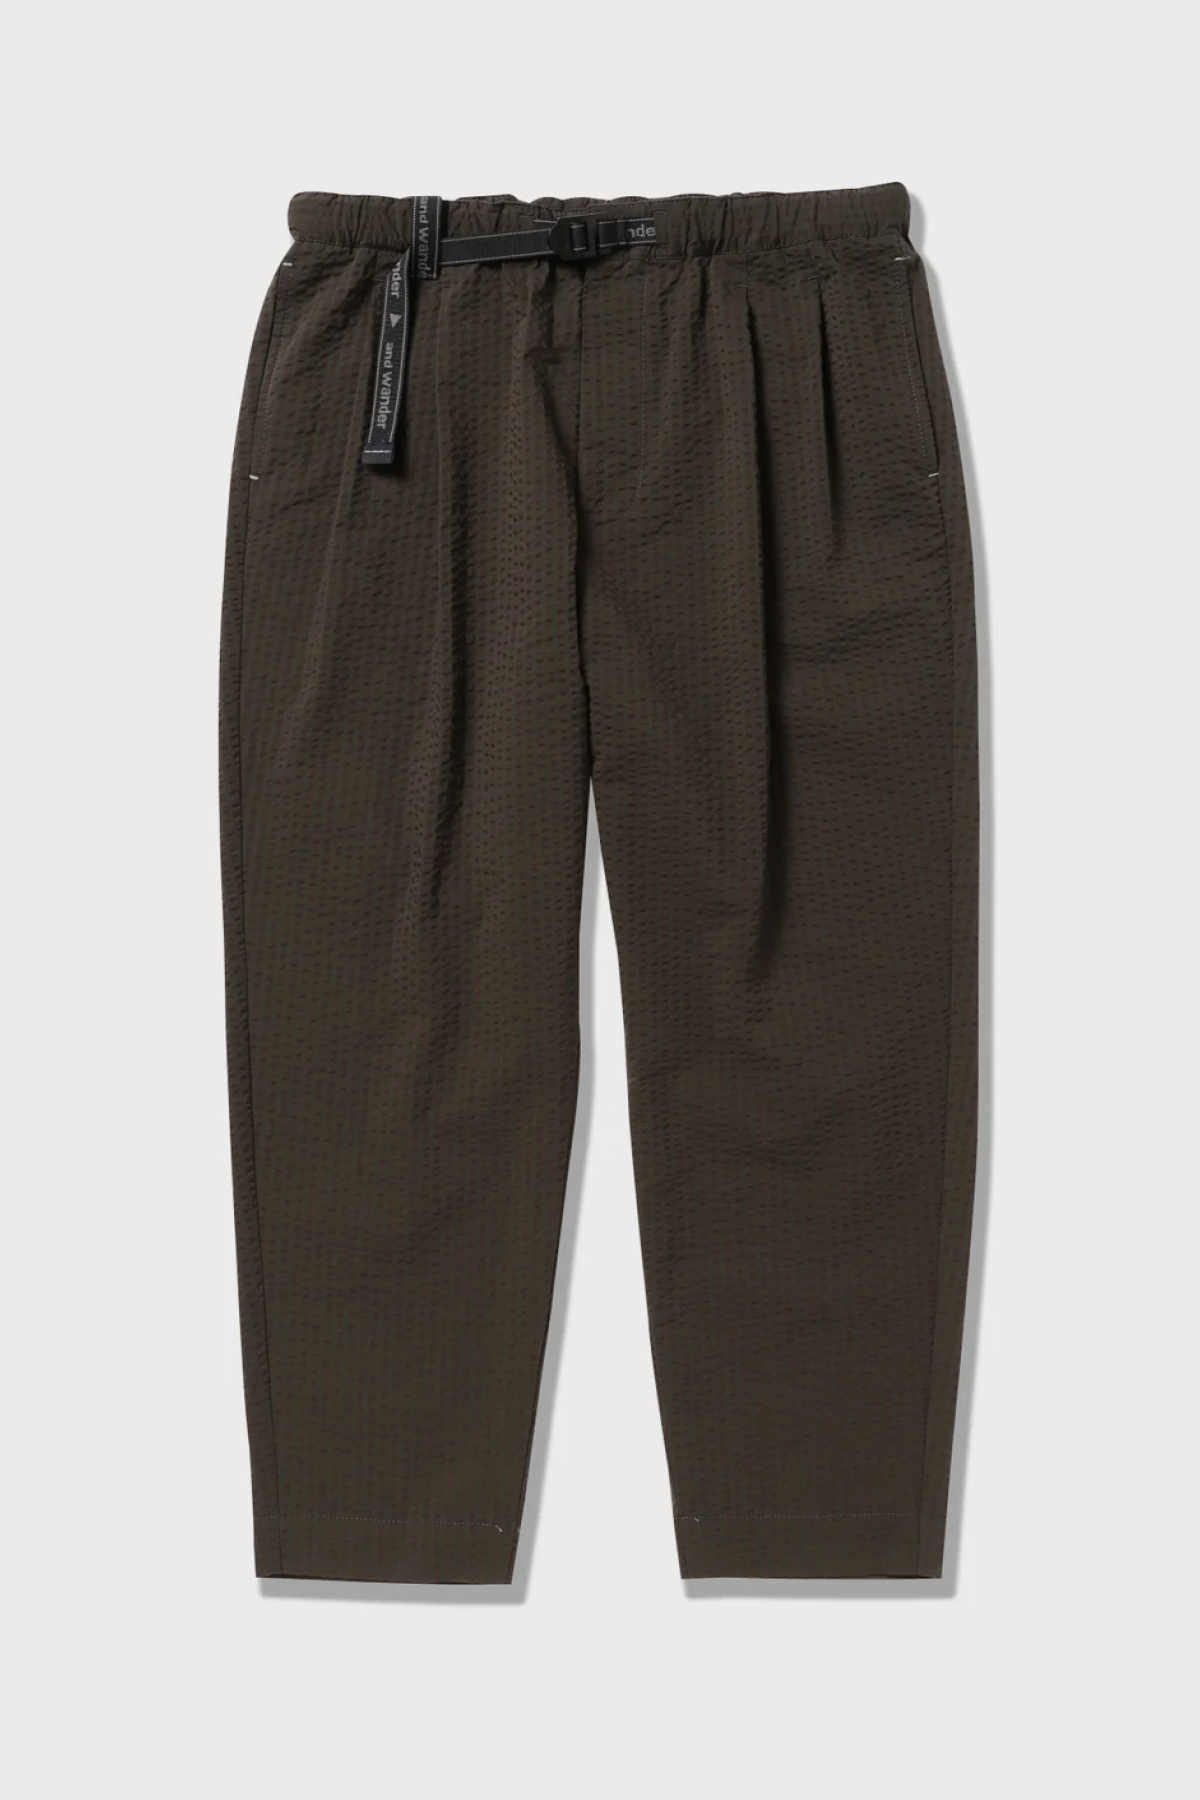 and Wander Dry Soft Seersucker Pants - Khaki